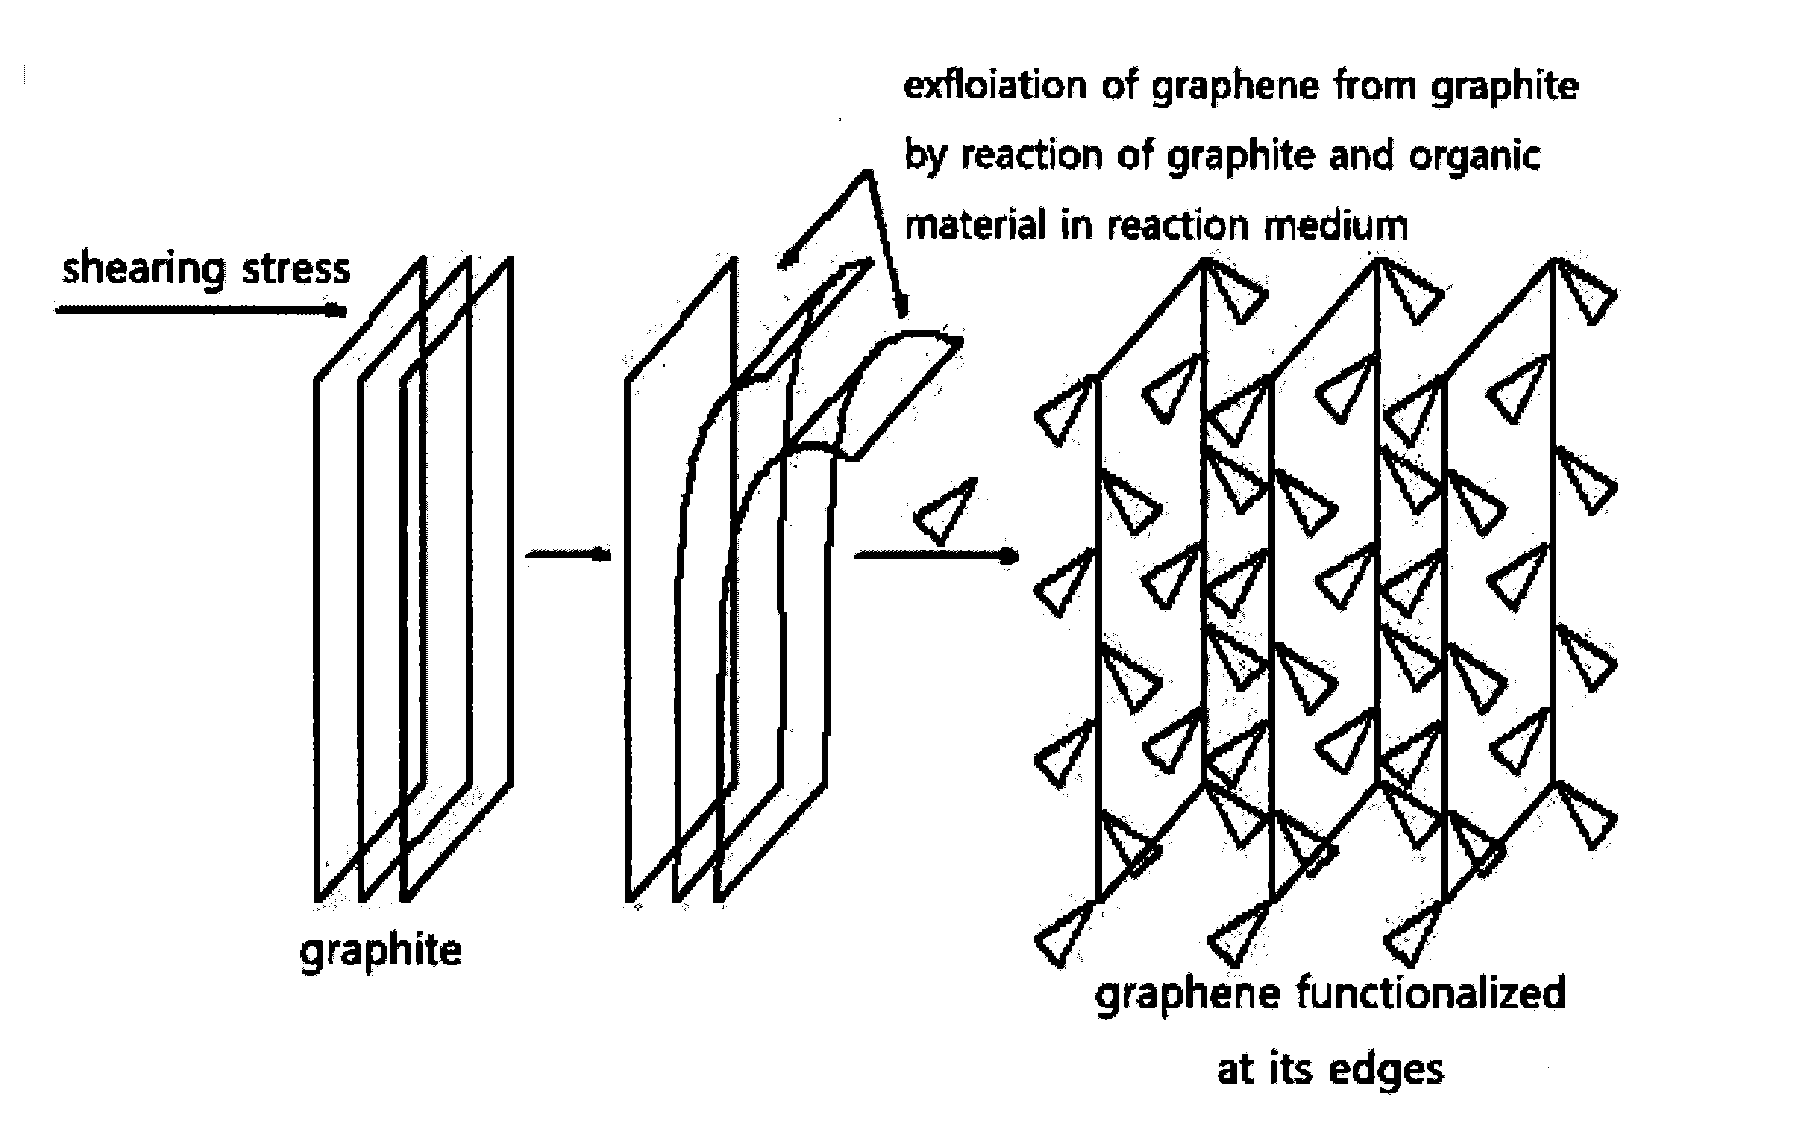 Graphene prepared by using edge functionalization of graphite